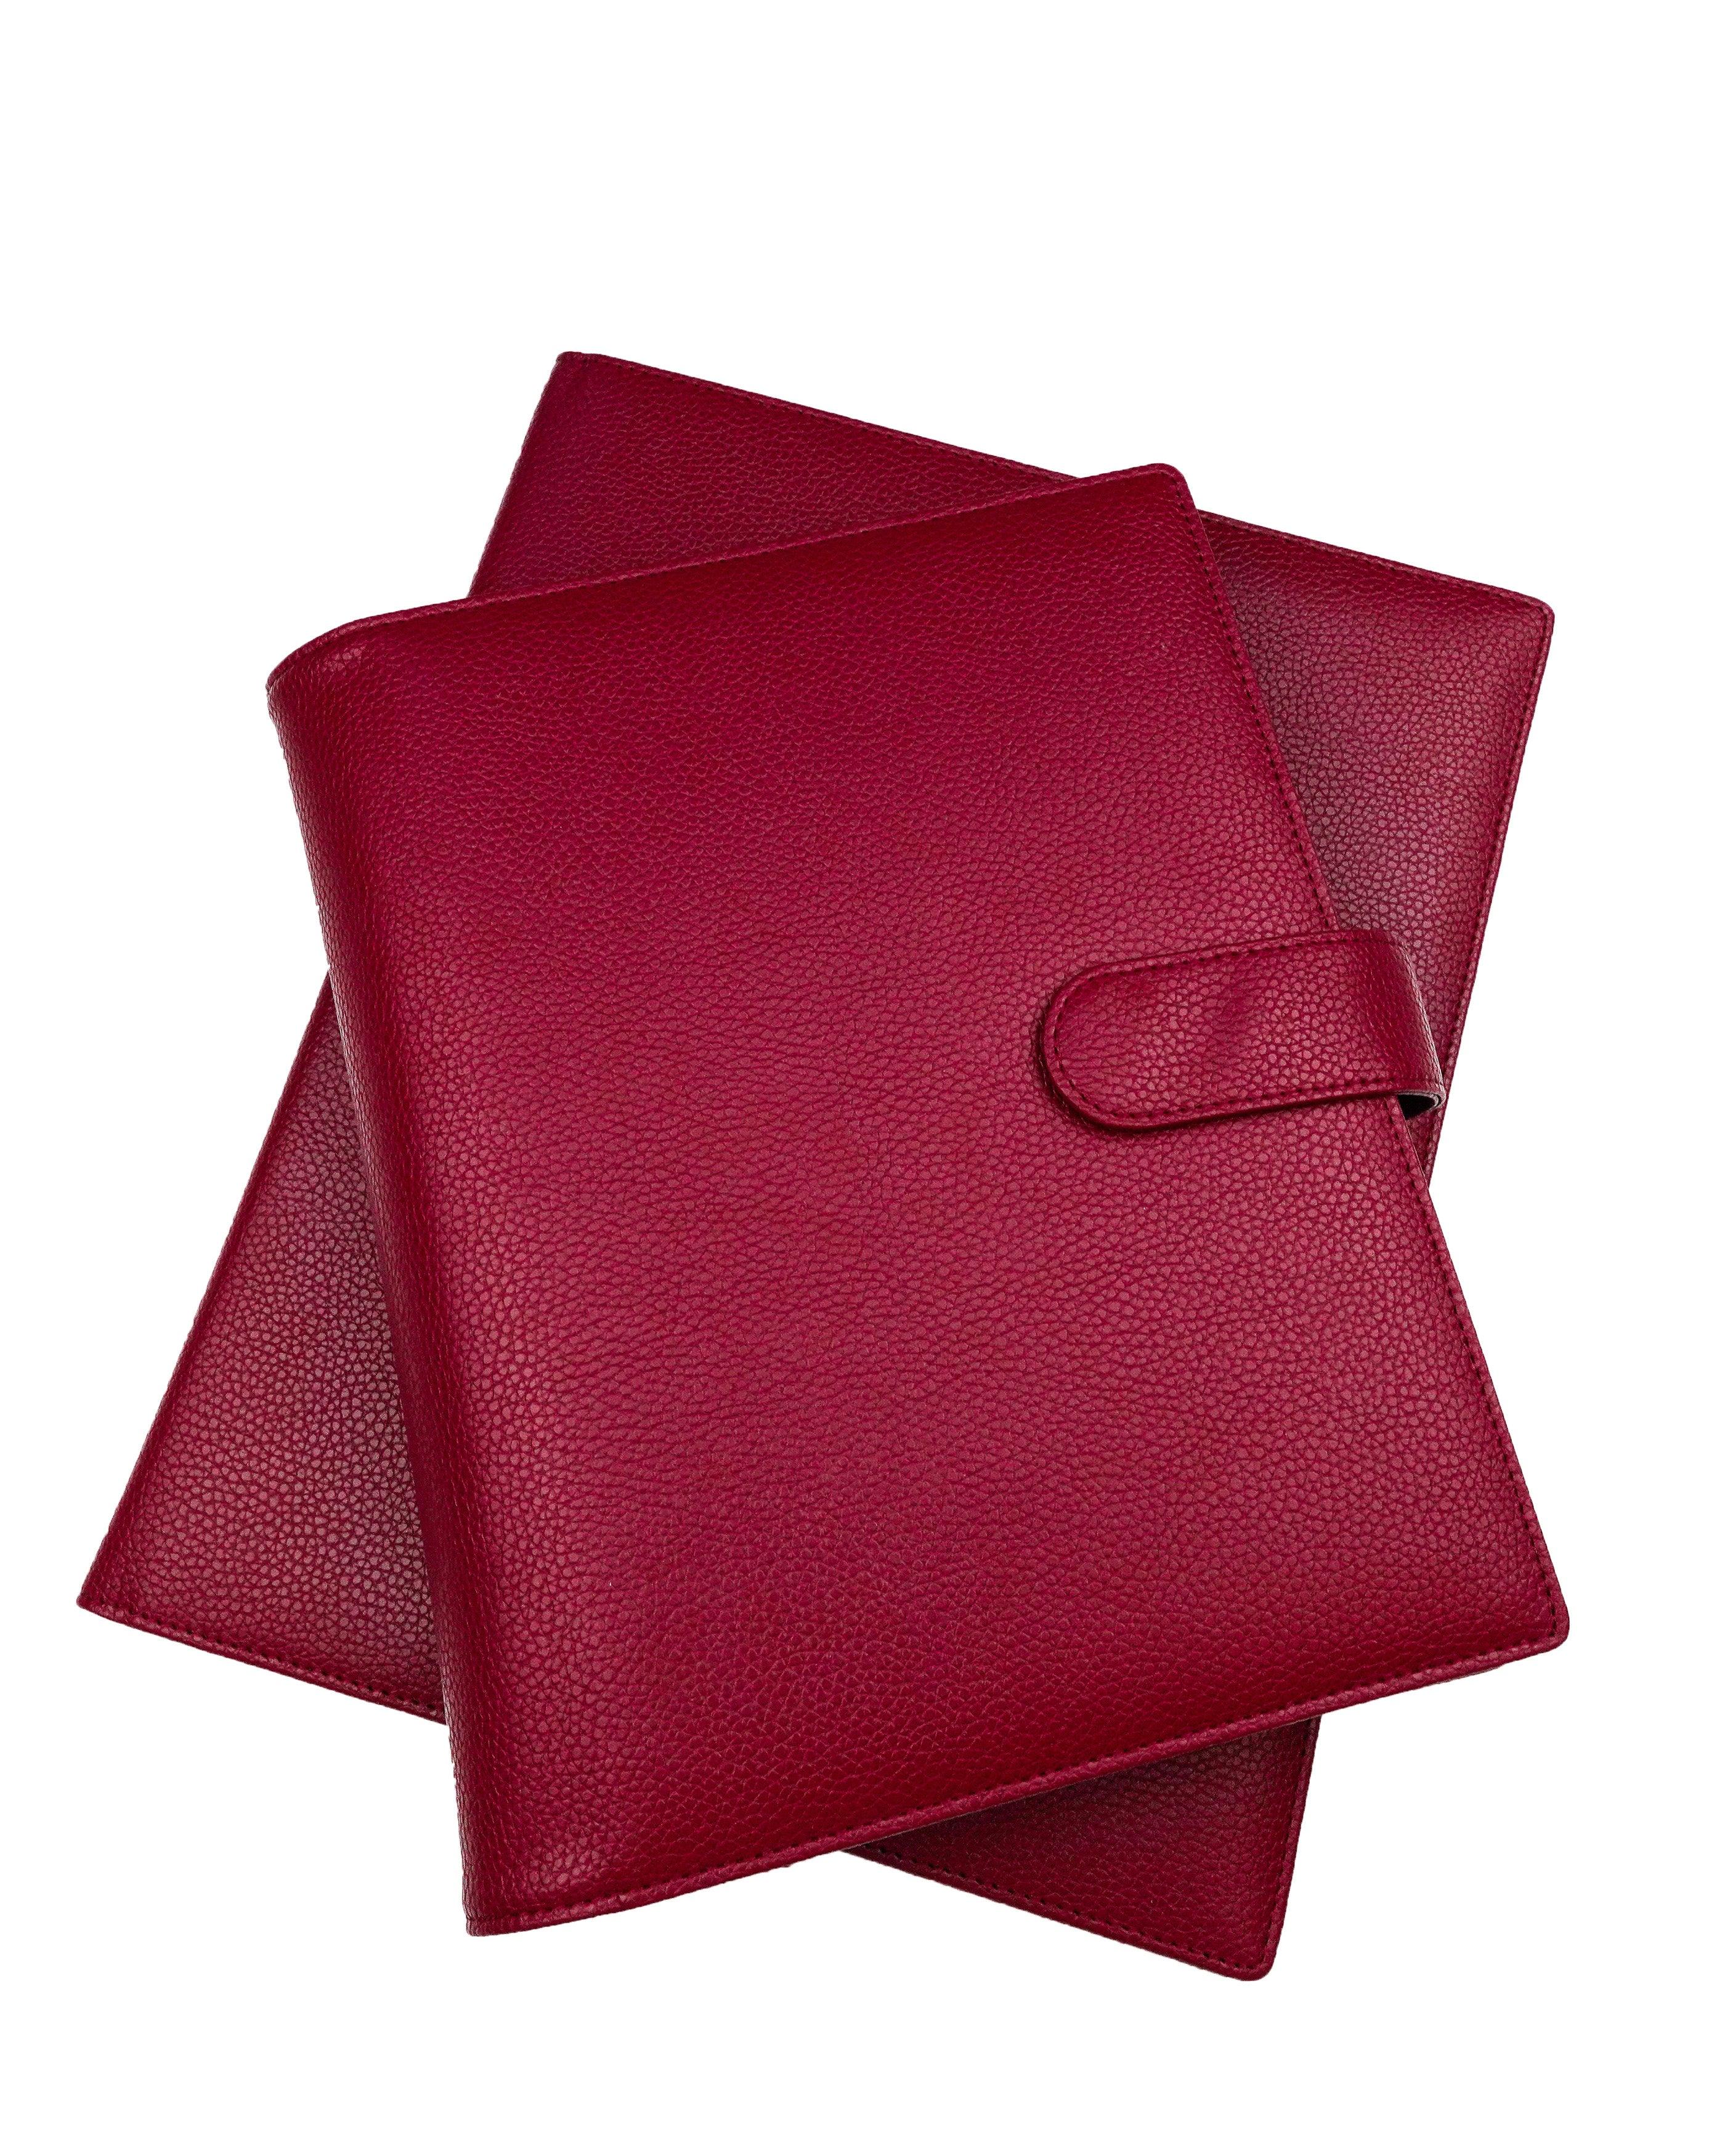 Discbound Planner Cover Folio  Wine Vegan Leather by Jane's Agenda®